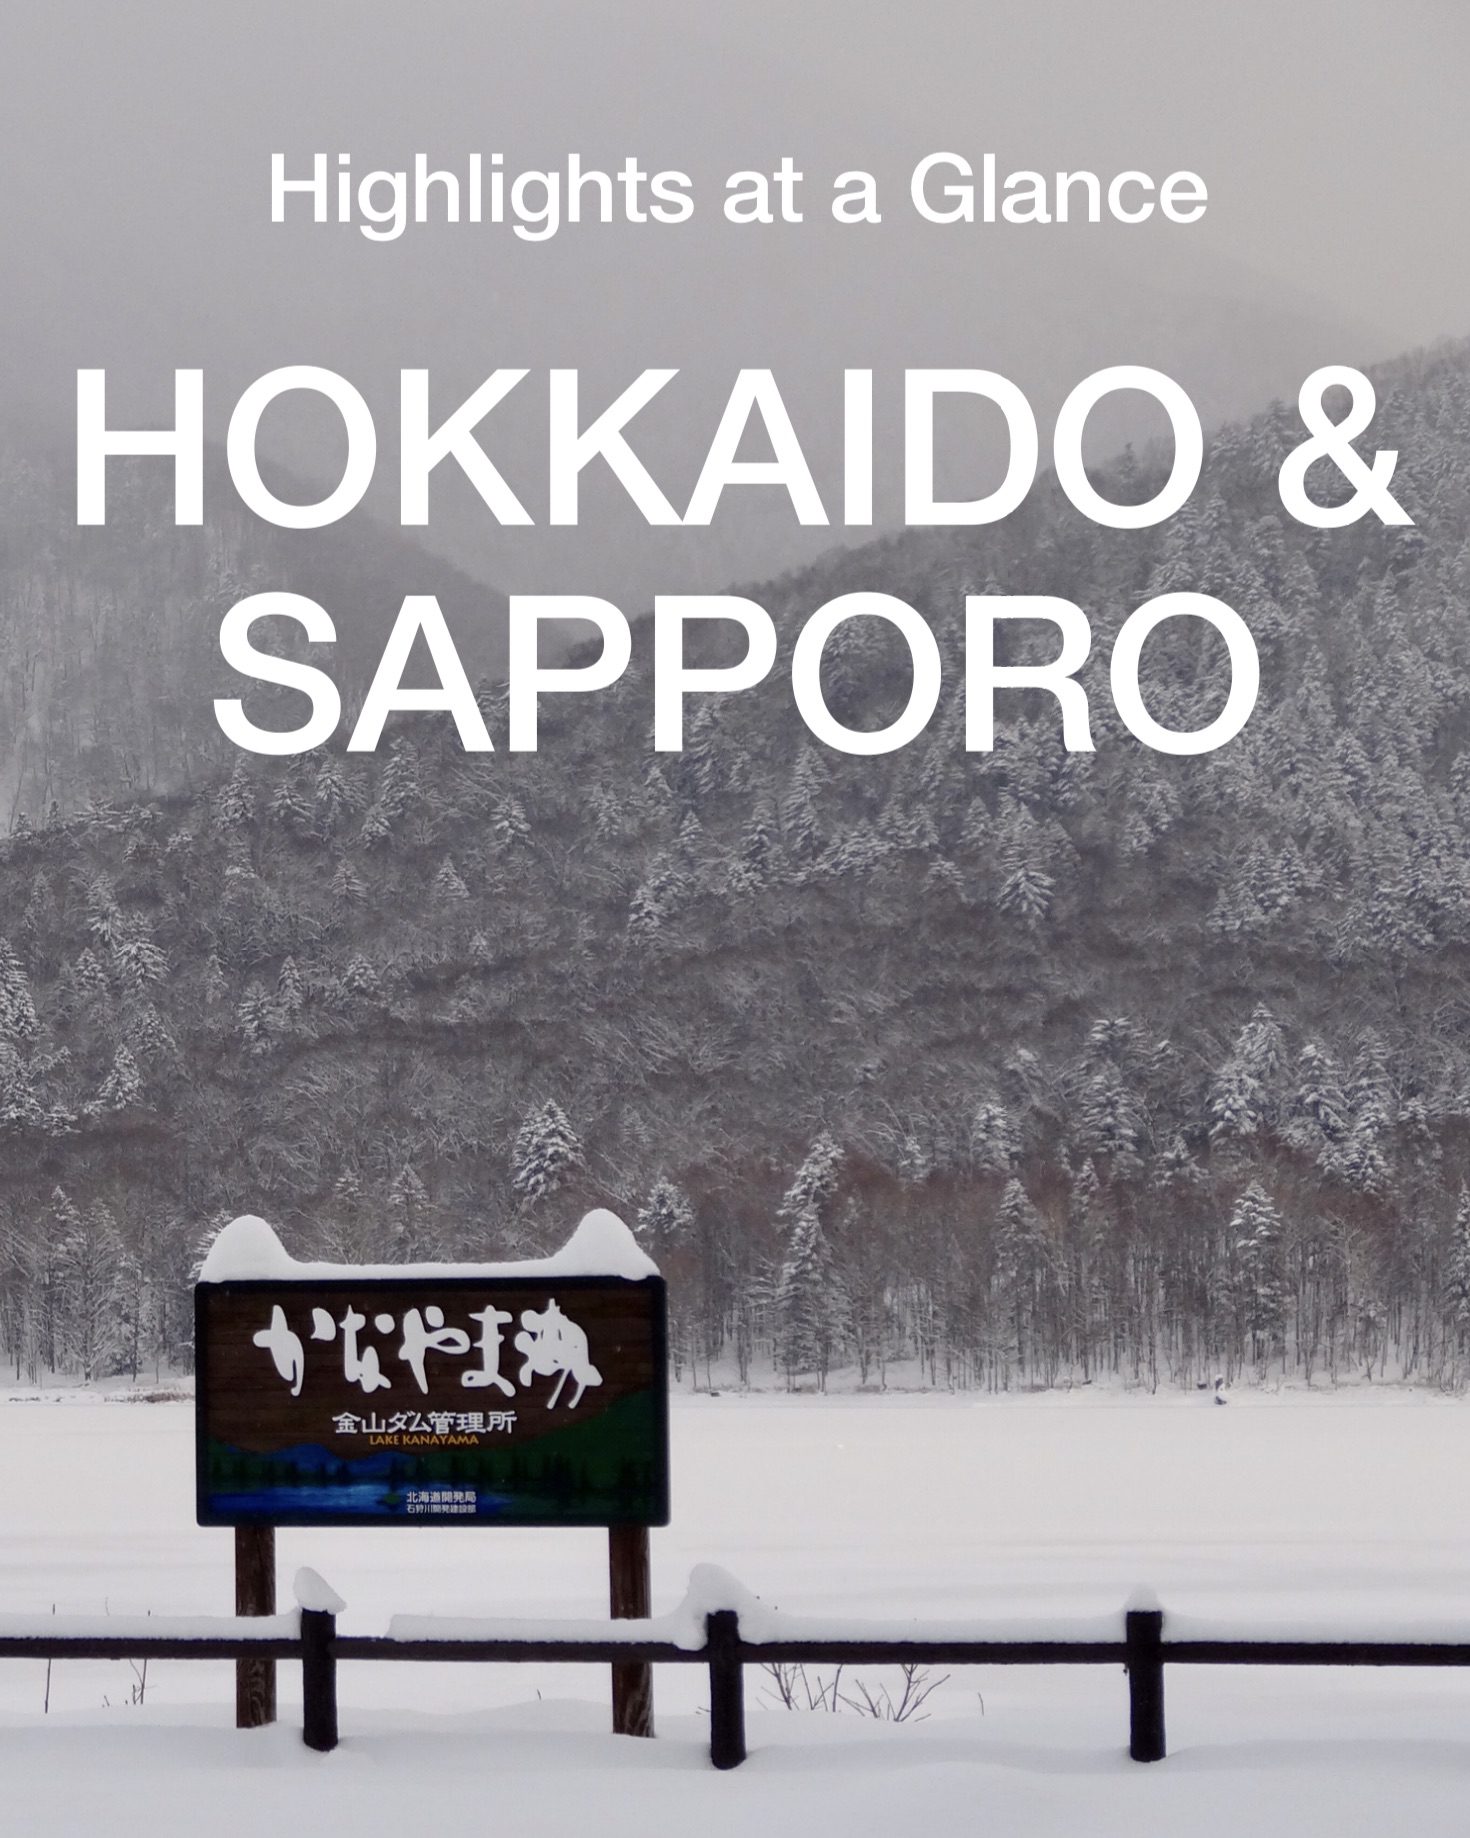 Hokkaido & Sapporo Travel Guide